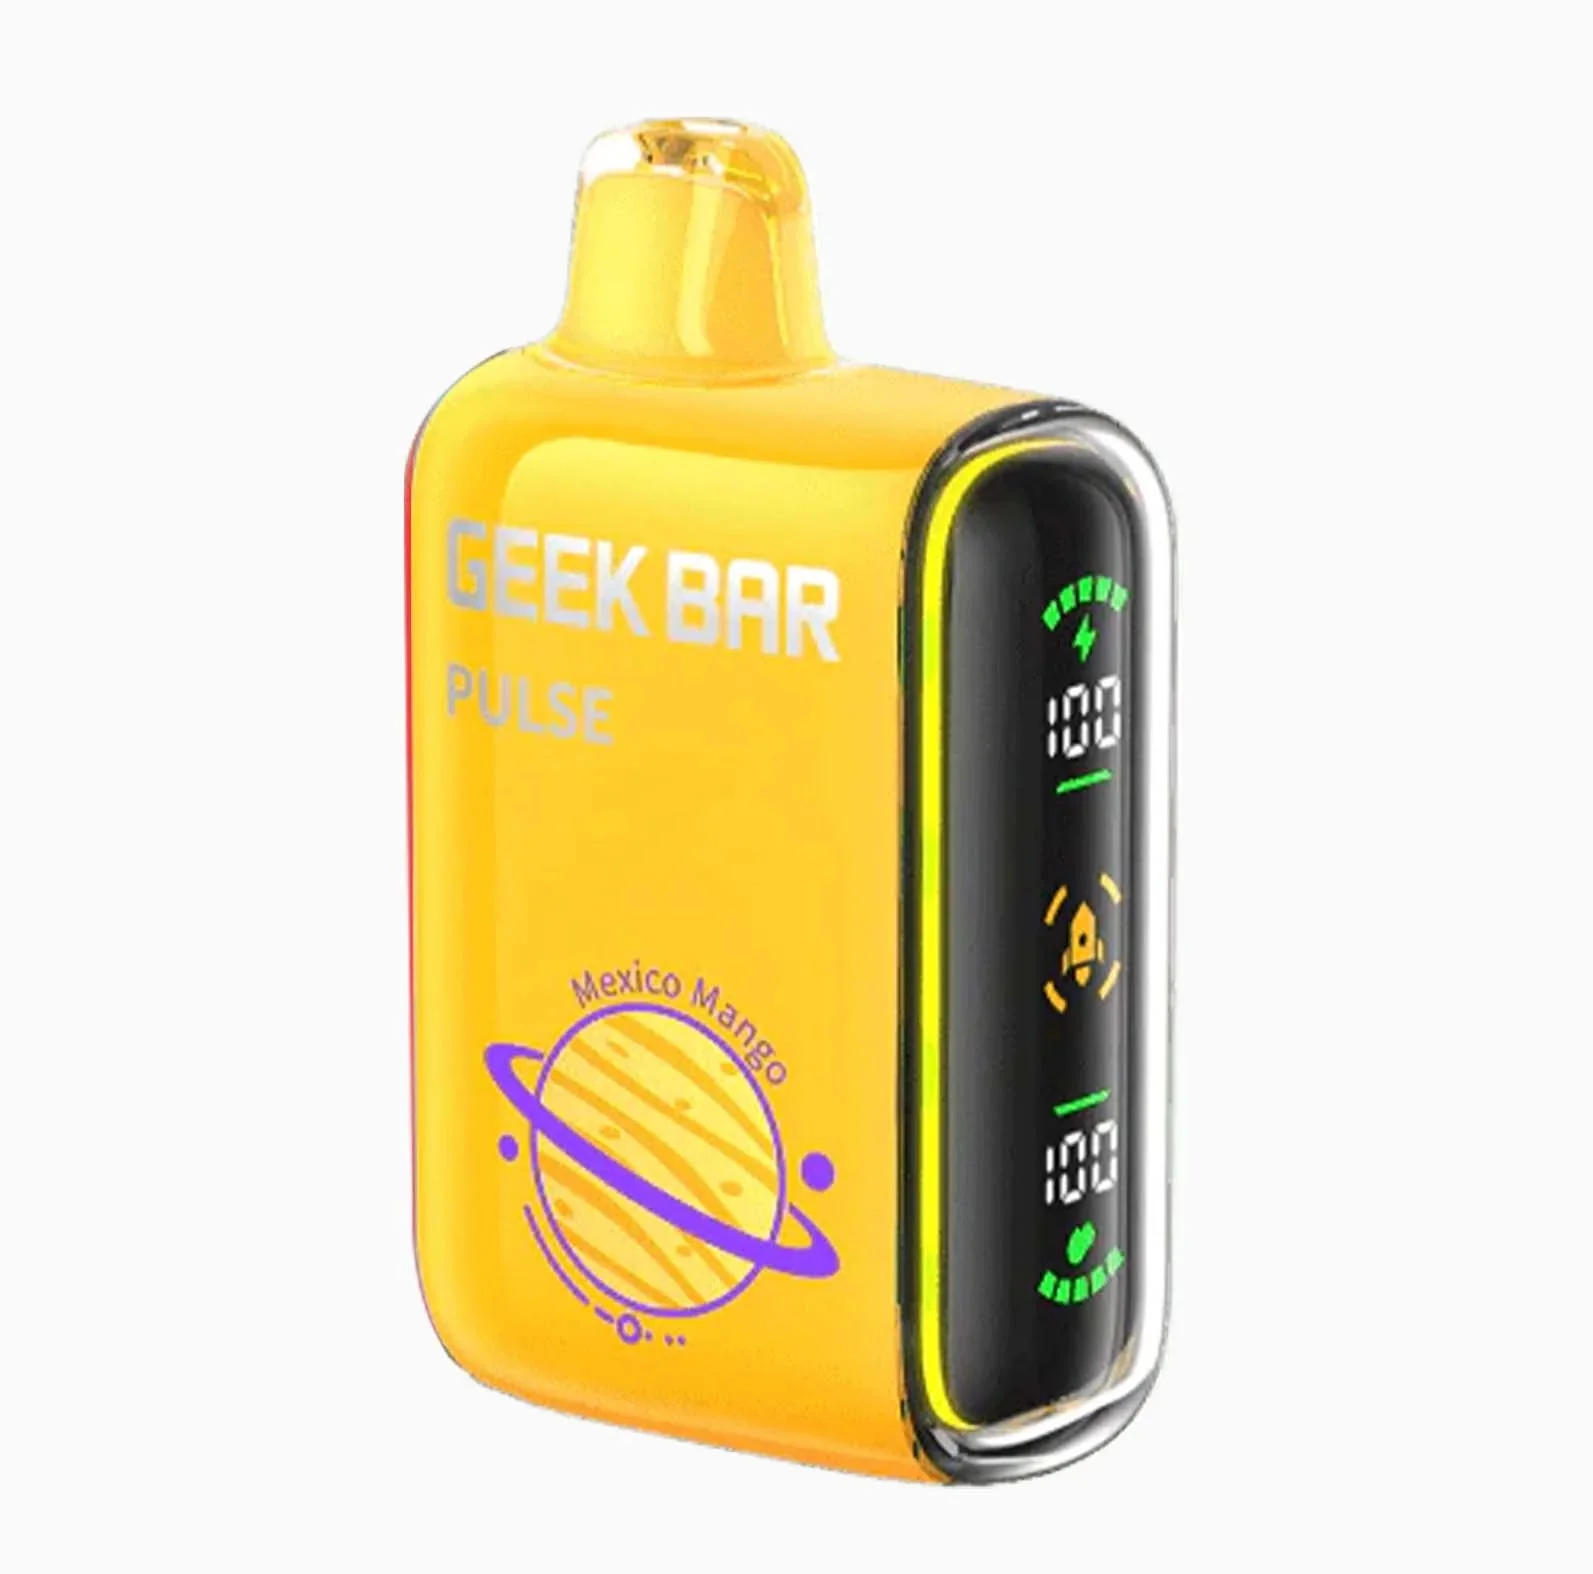 Geek Bar Pulse 15000 Disposable